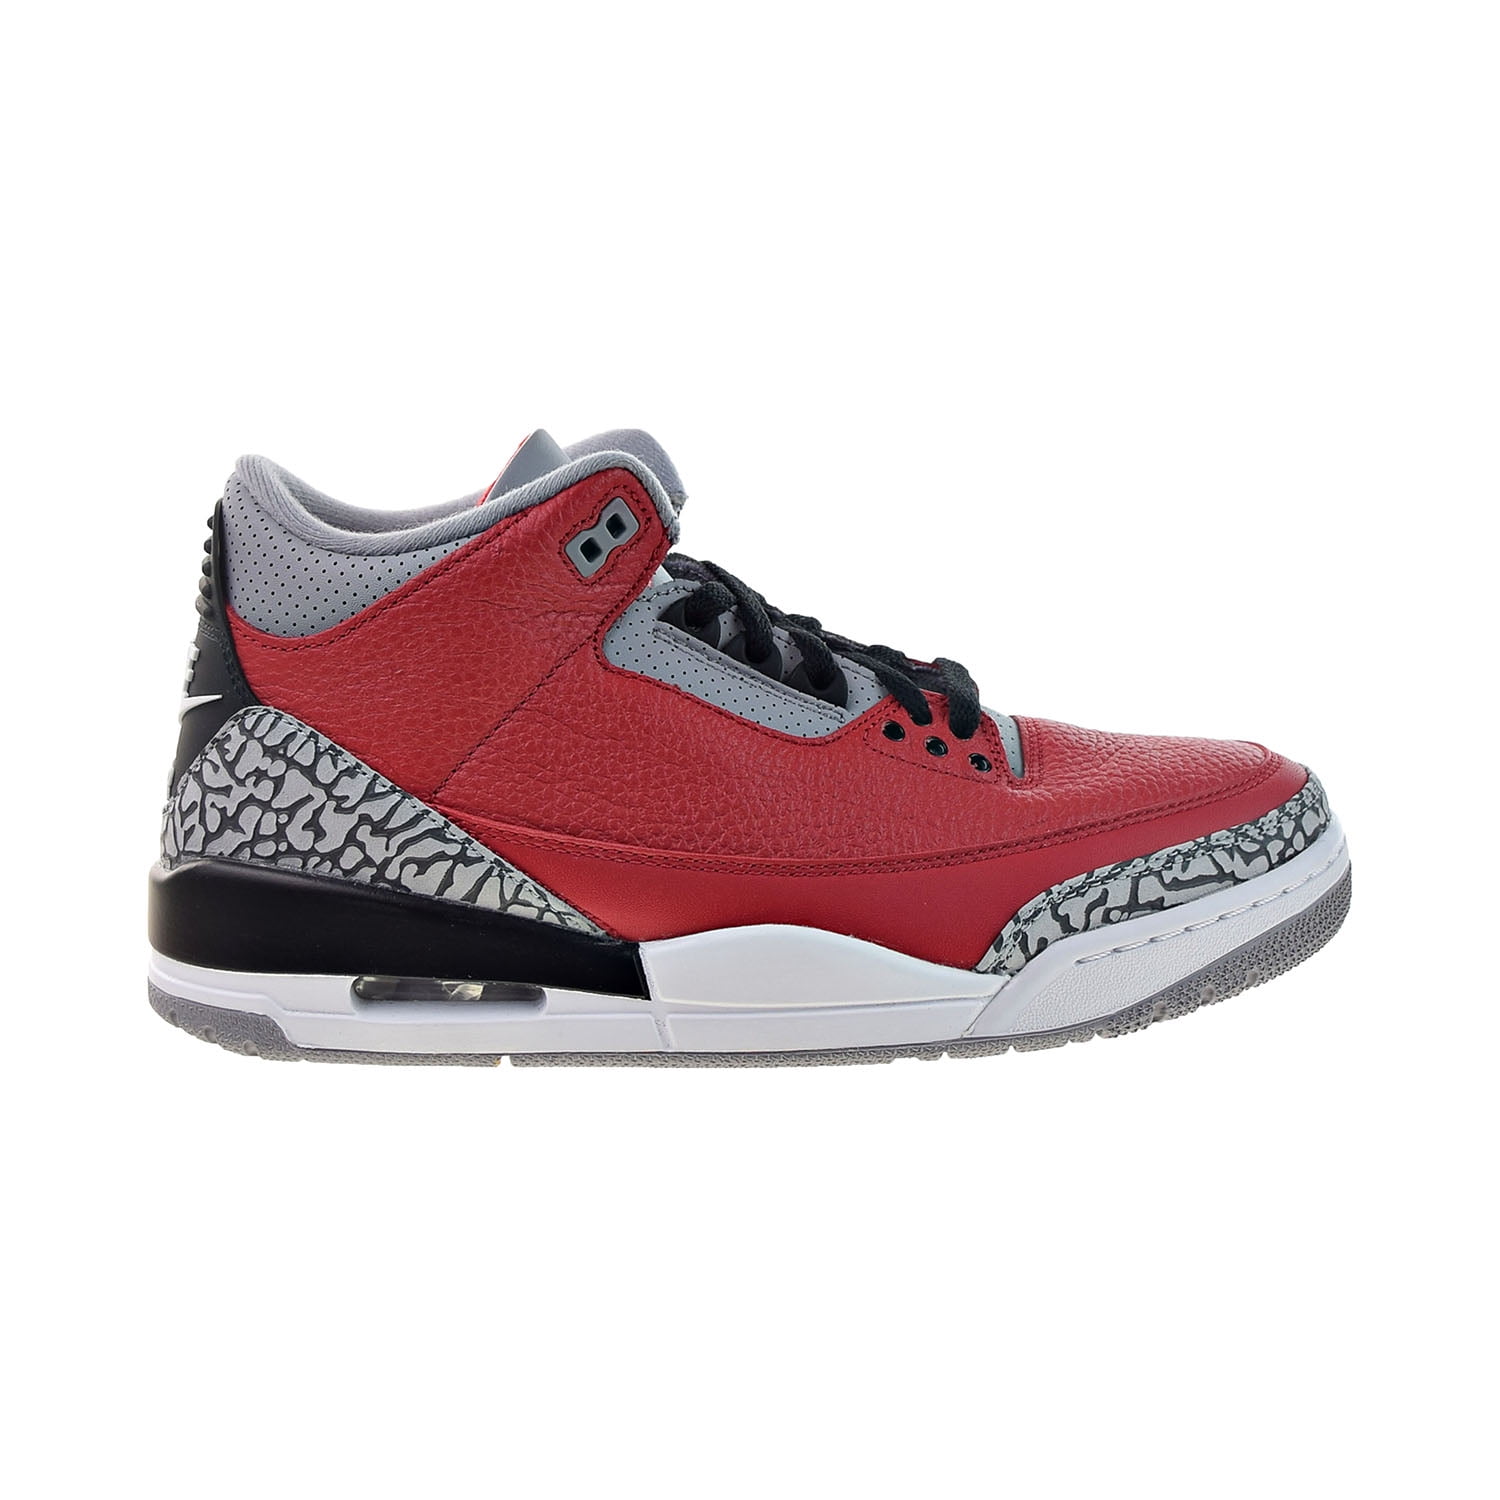 Nike Air Jordan 3 Retro SE 'Unite' Men's Shoes Fire Red-Fire Red